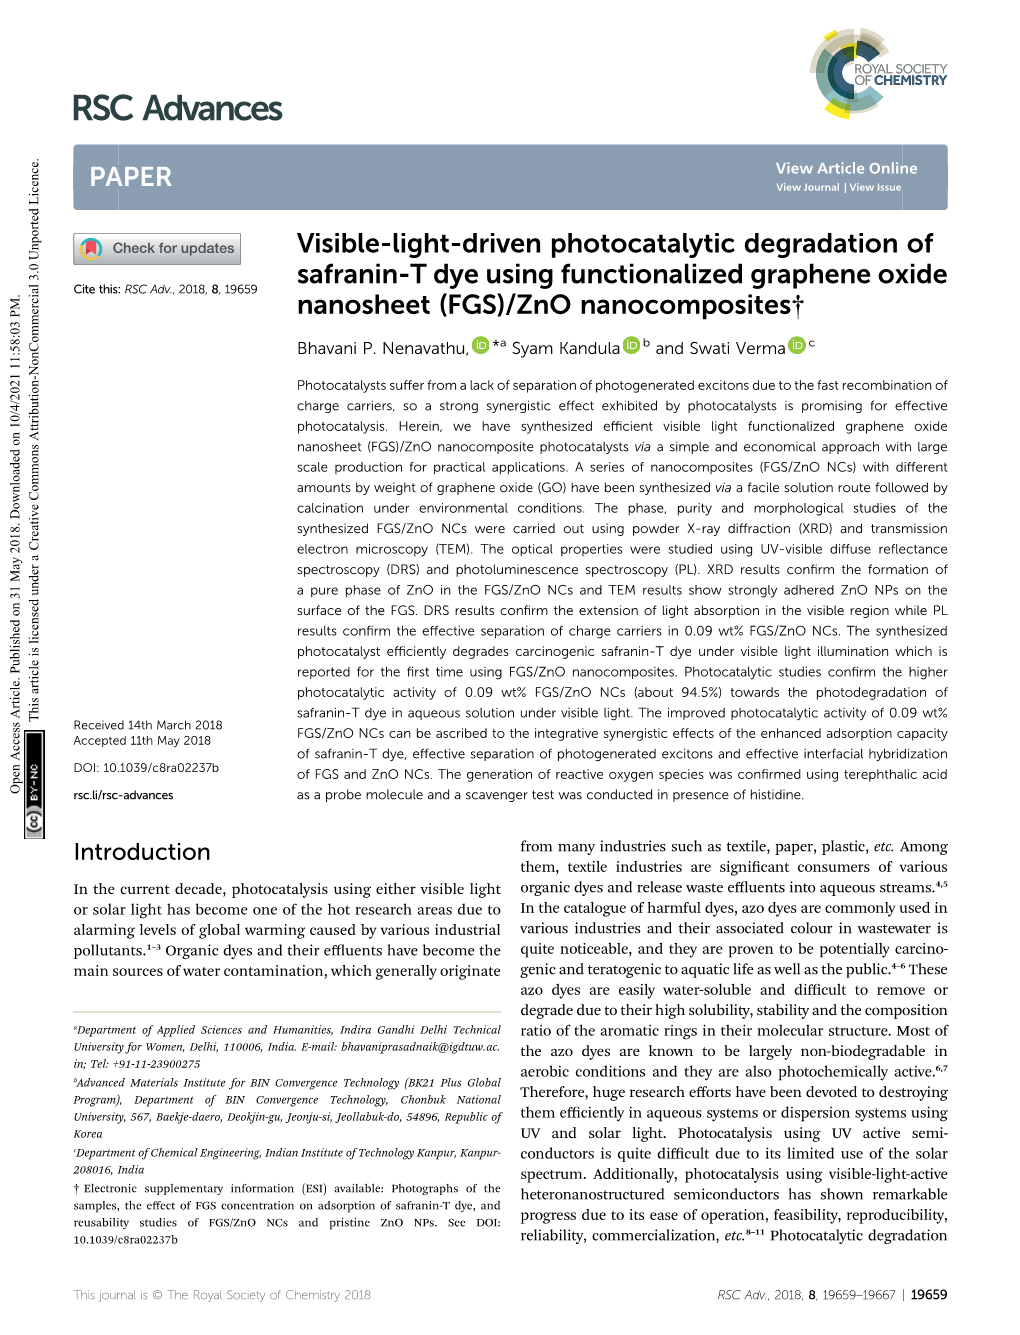 Visible-Light-Driven Photocatalytic Degradation of Safranin-T Dye Using